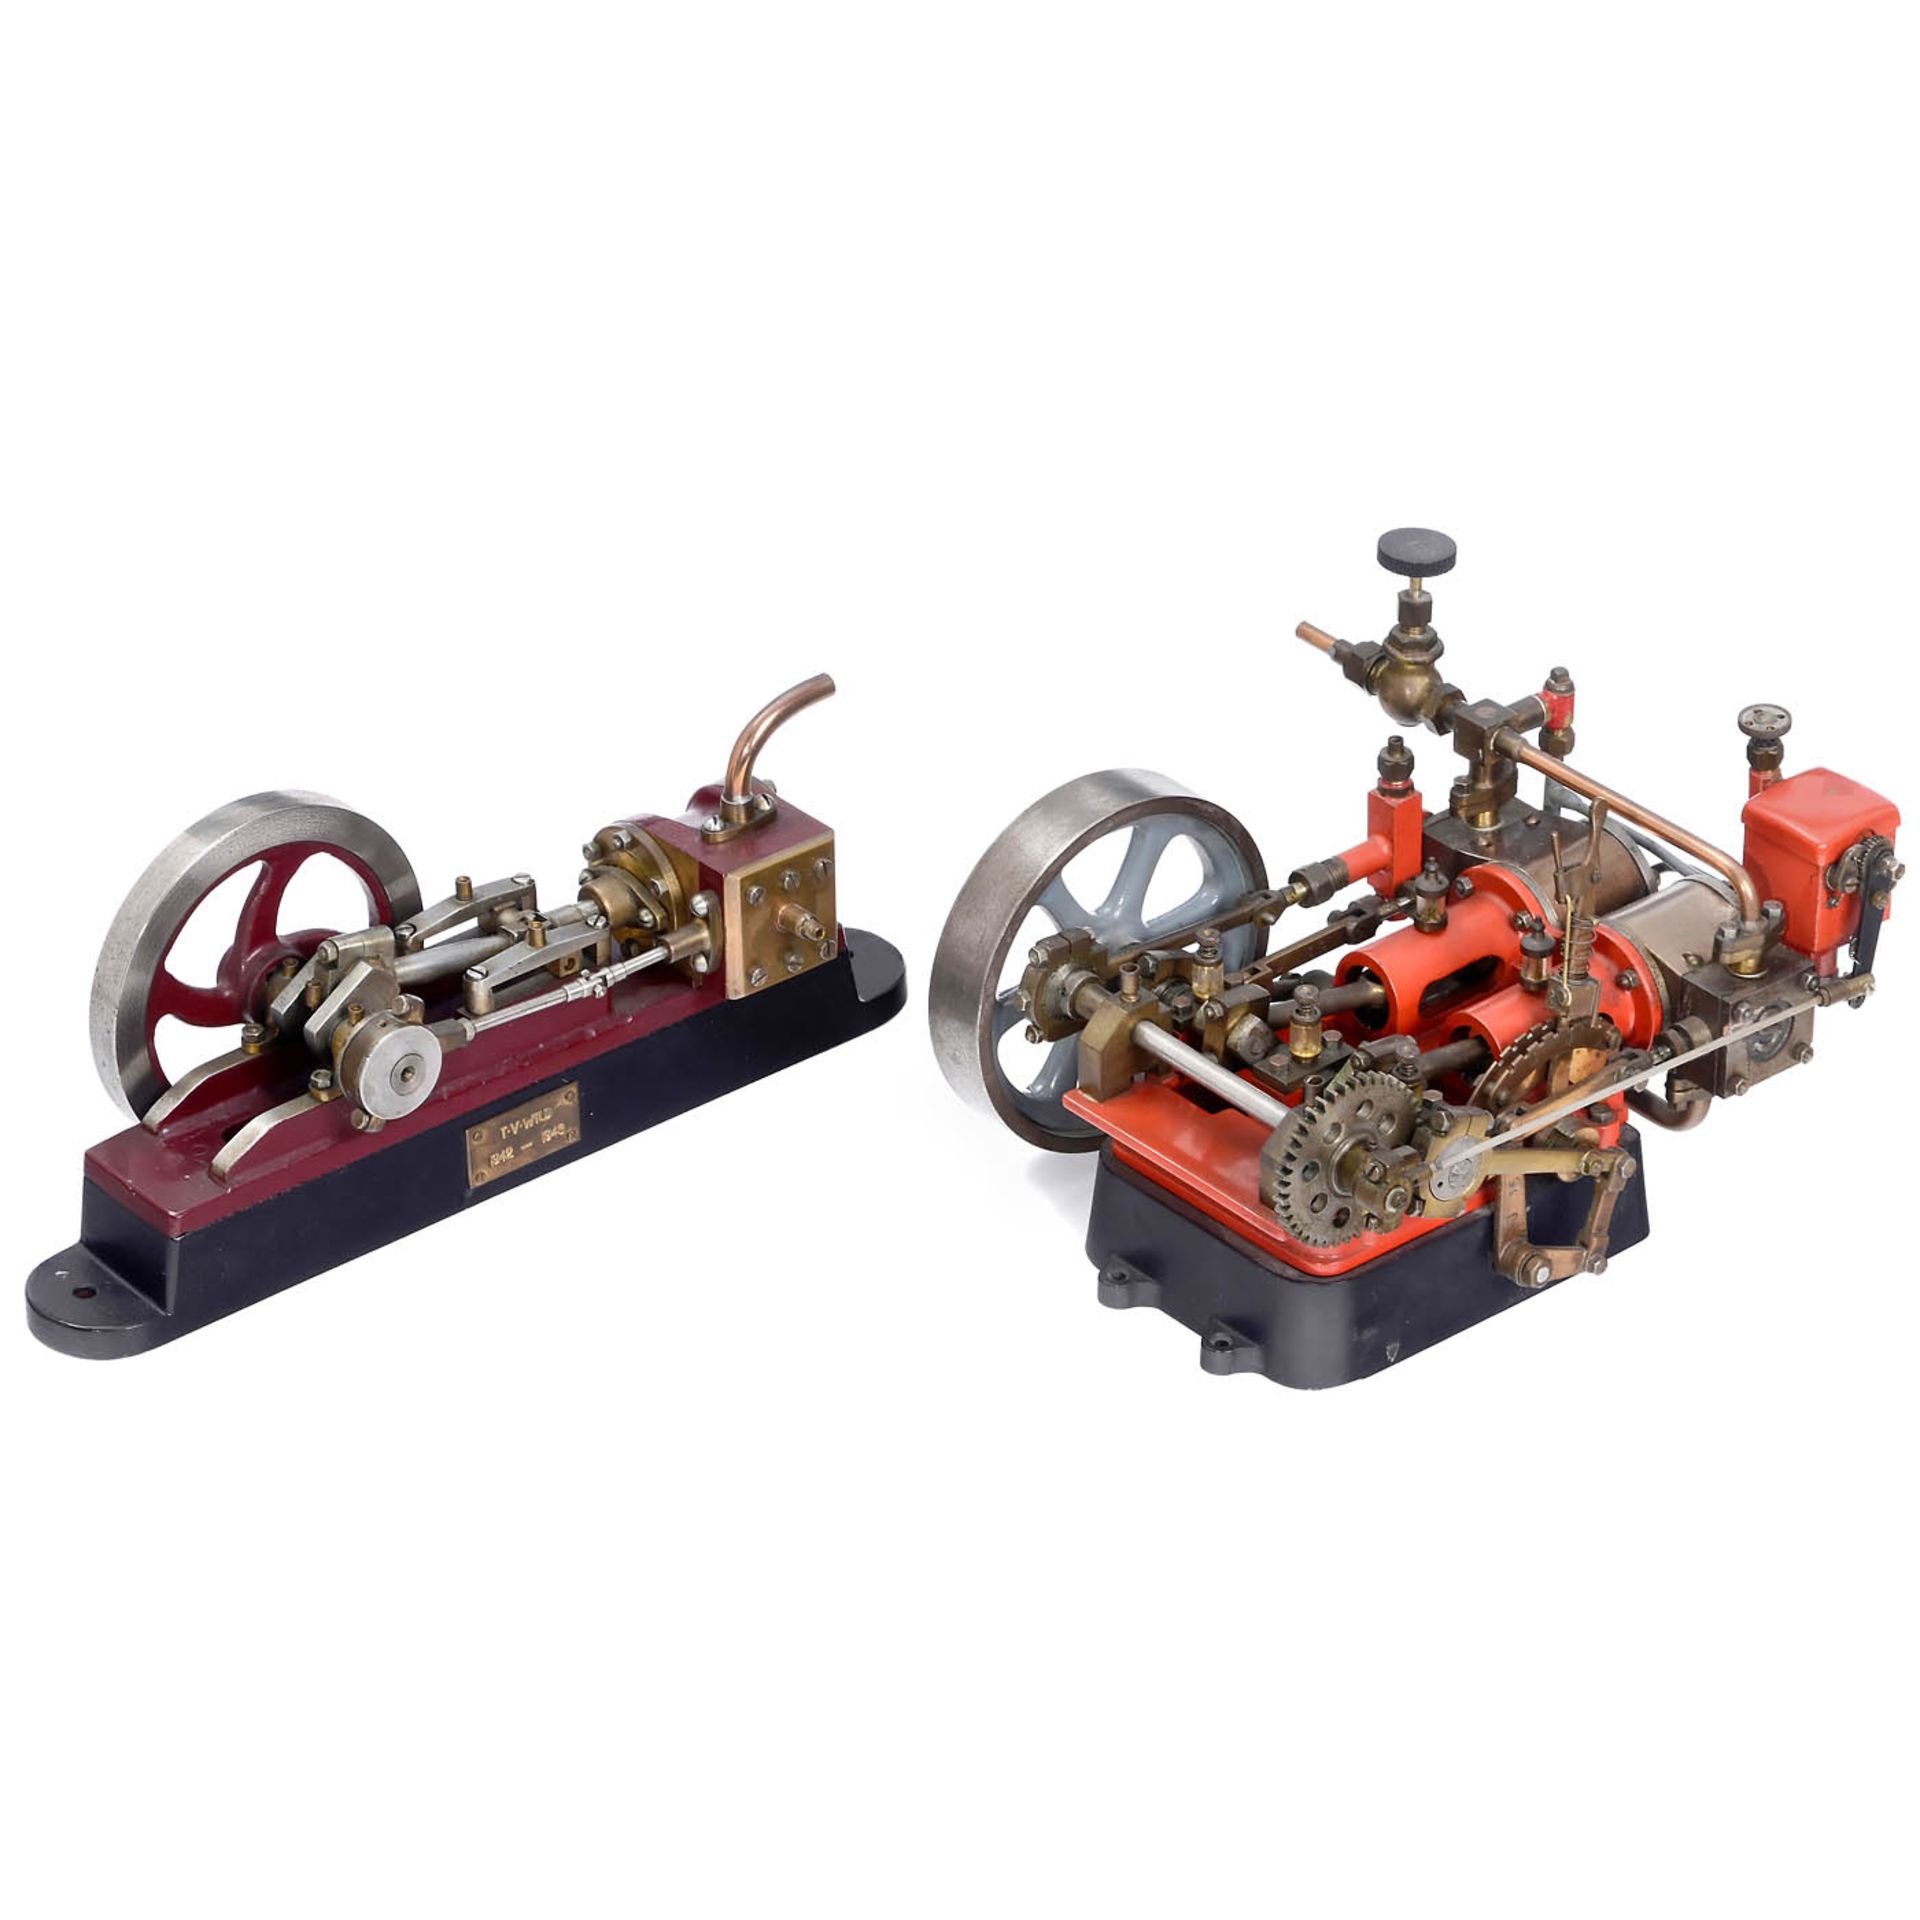 2 Horizontal Steam Engines, c. 1950